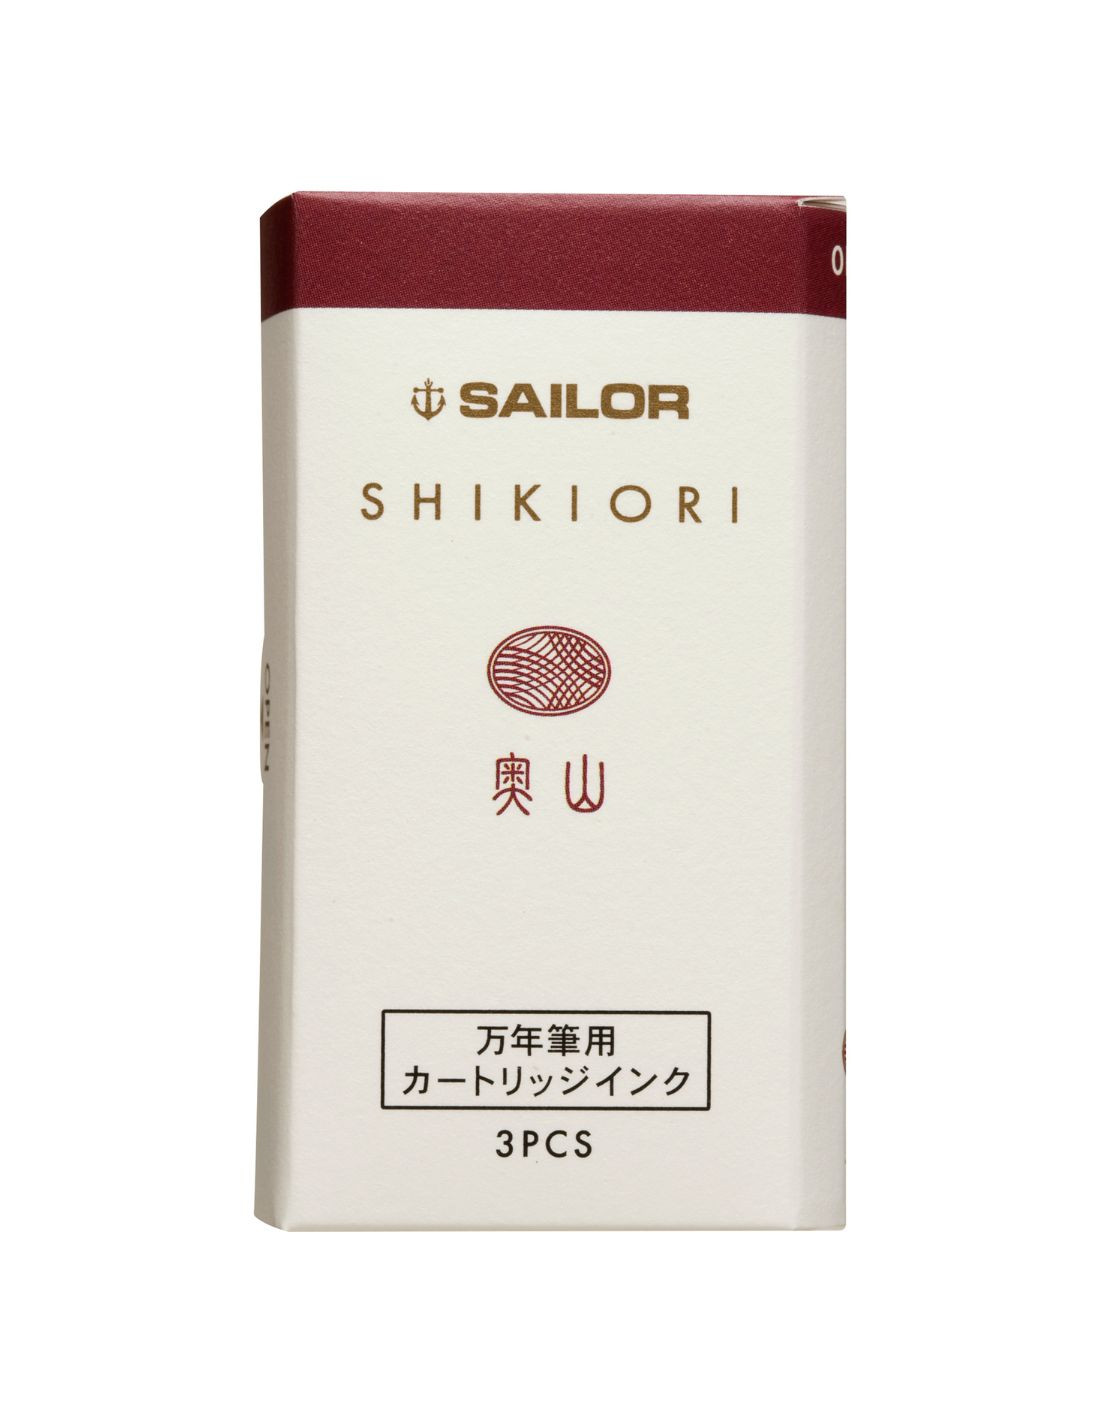 Shikiori Izayoi-no-Yume Ink - Okuyama (Remote Mountain) - 3 Cartridges - Sailor Papeterie Makkura